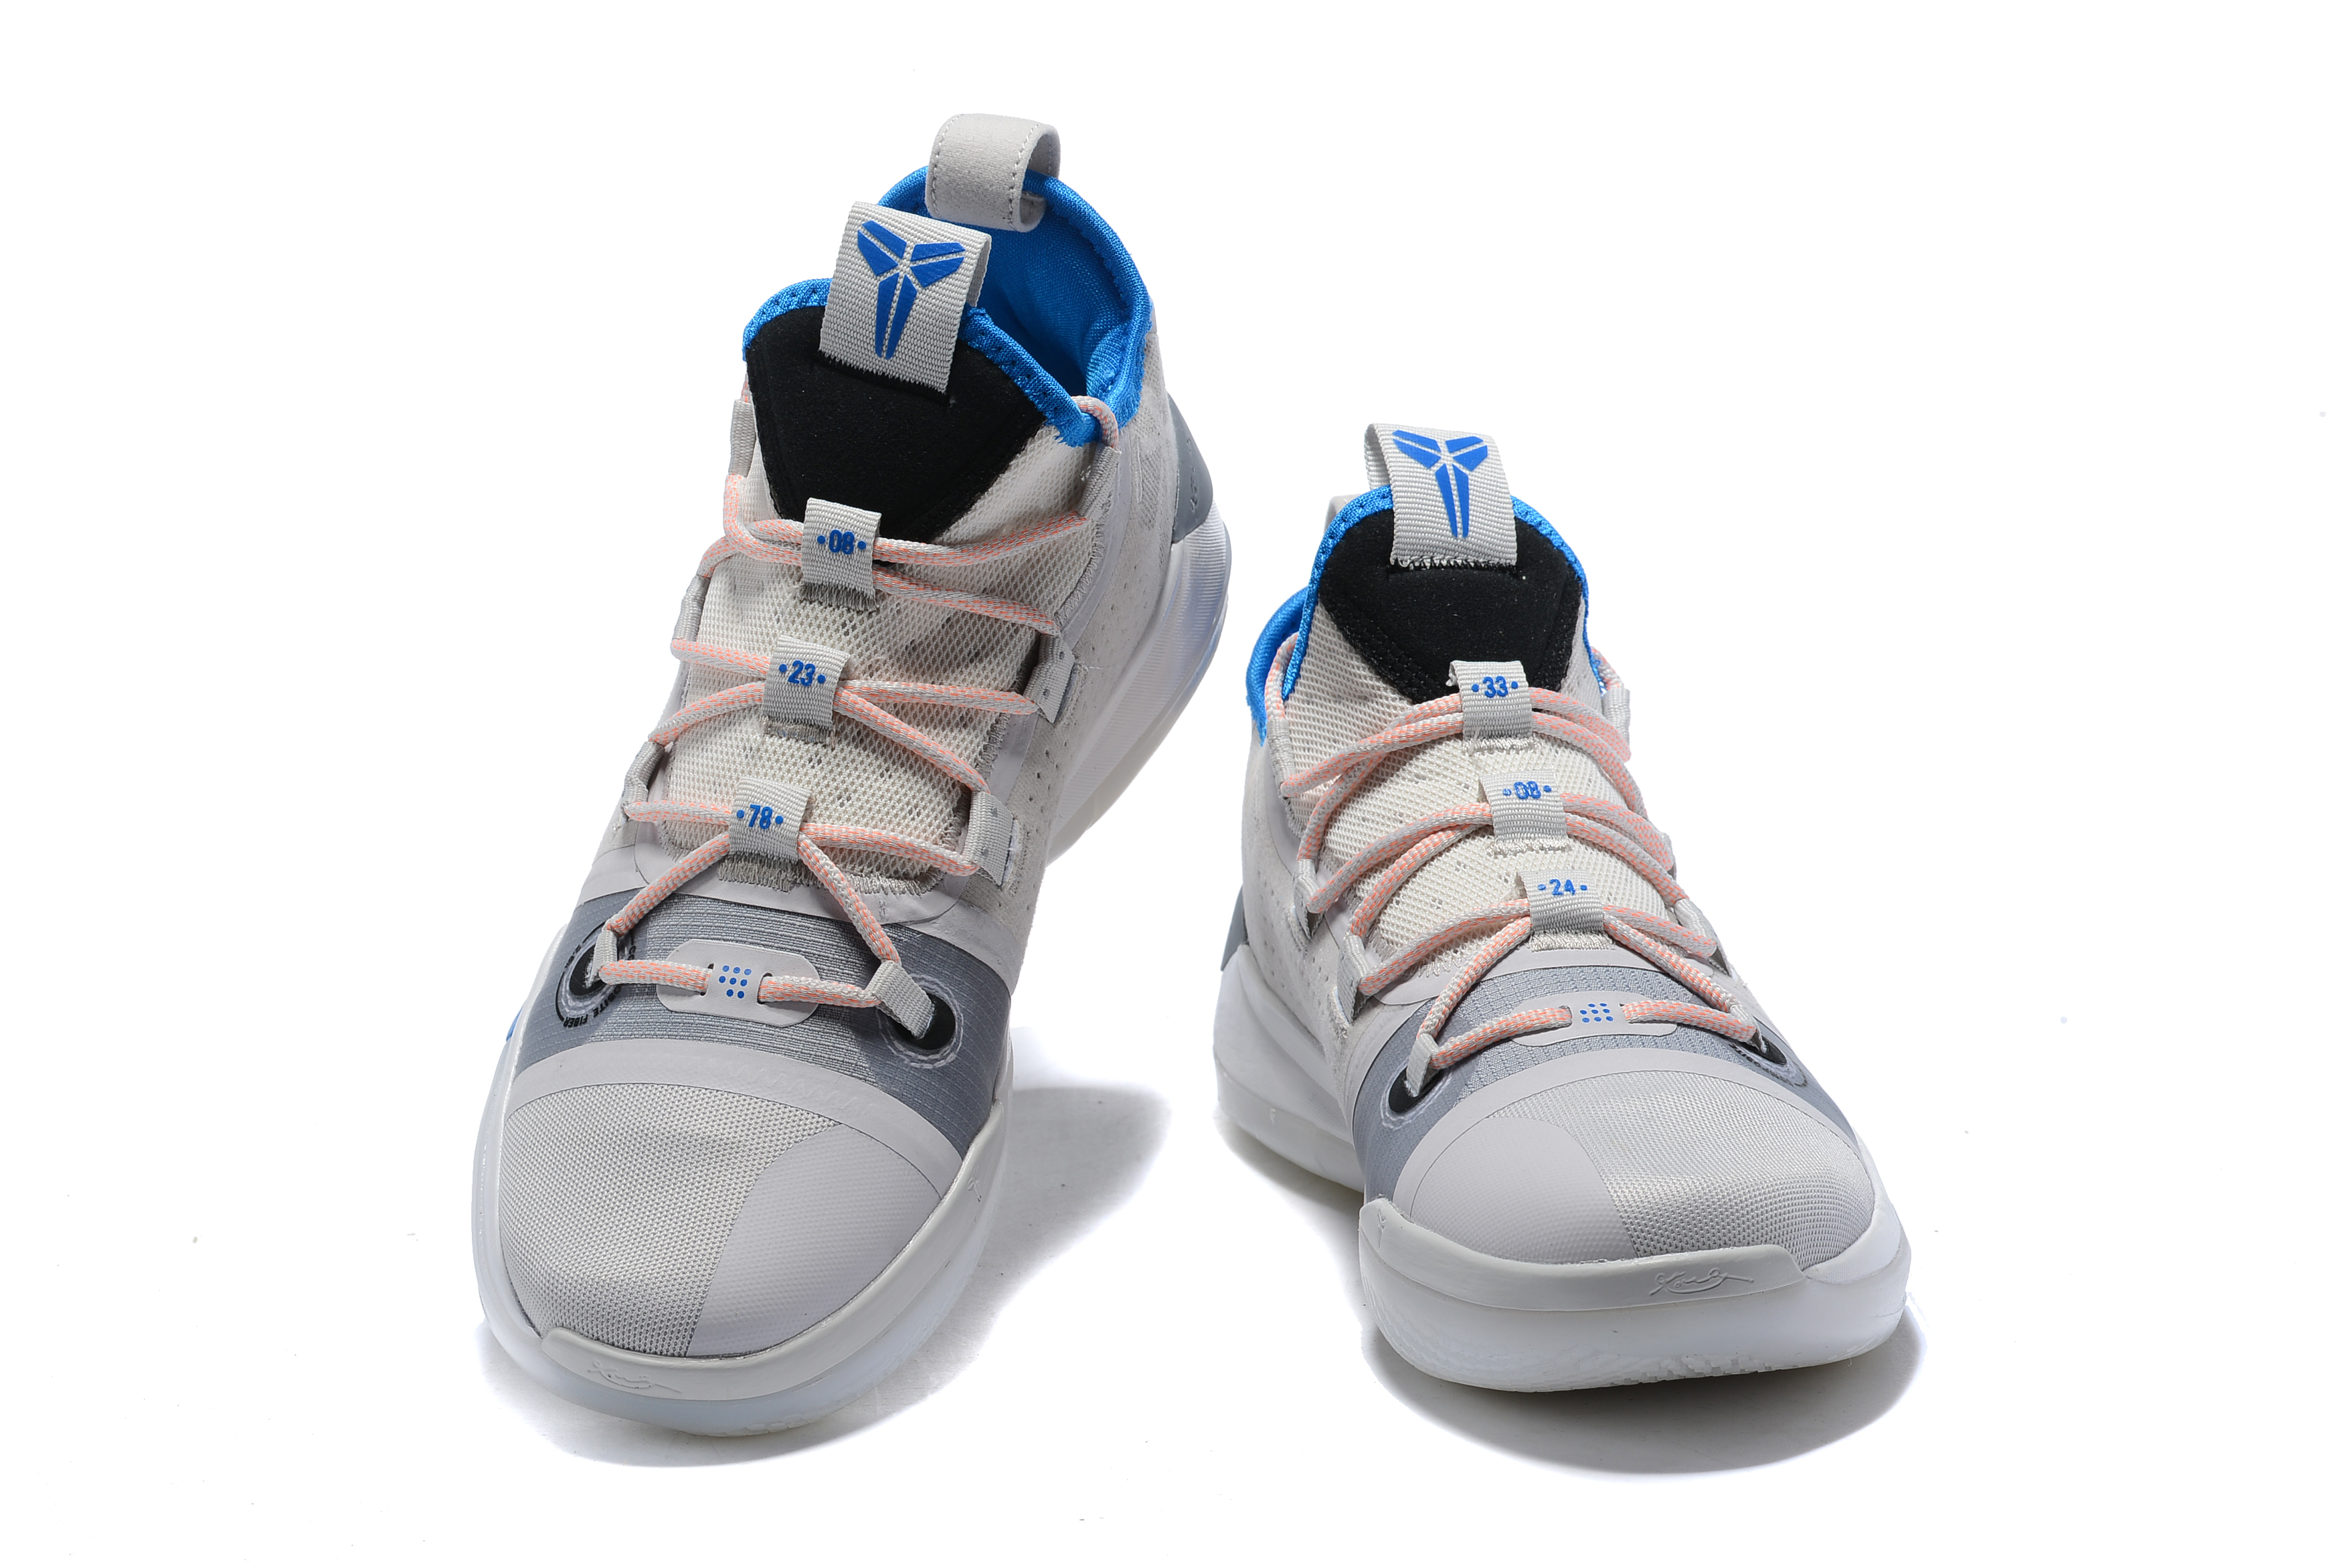 New Nike Kobe AD Light Pink Blue Shoes